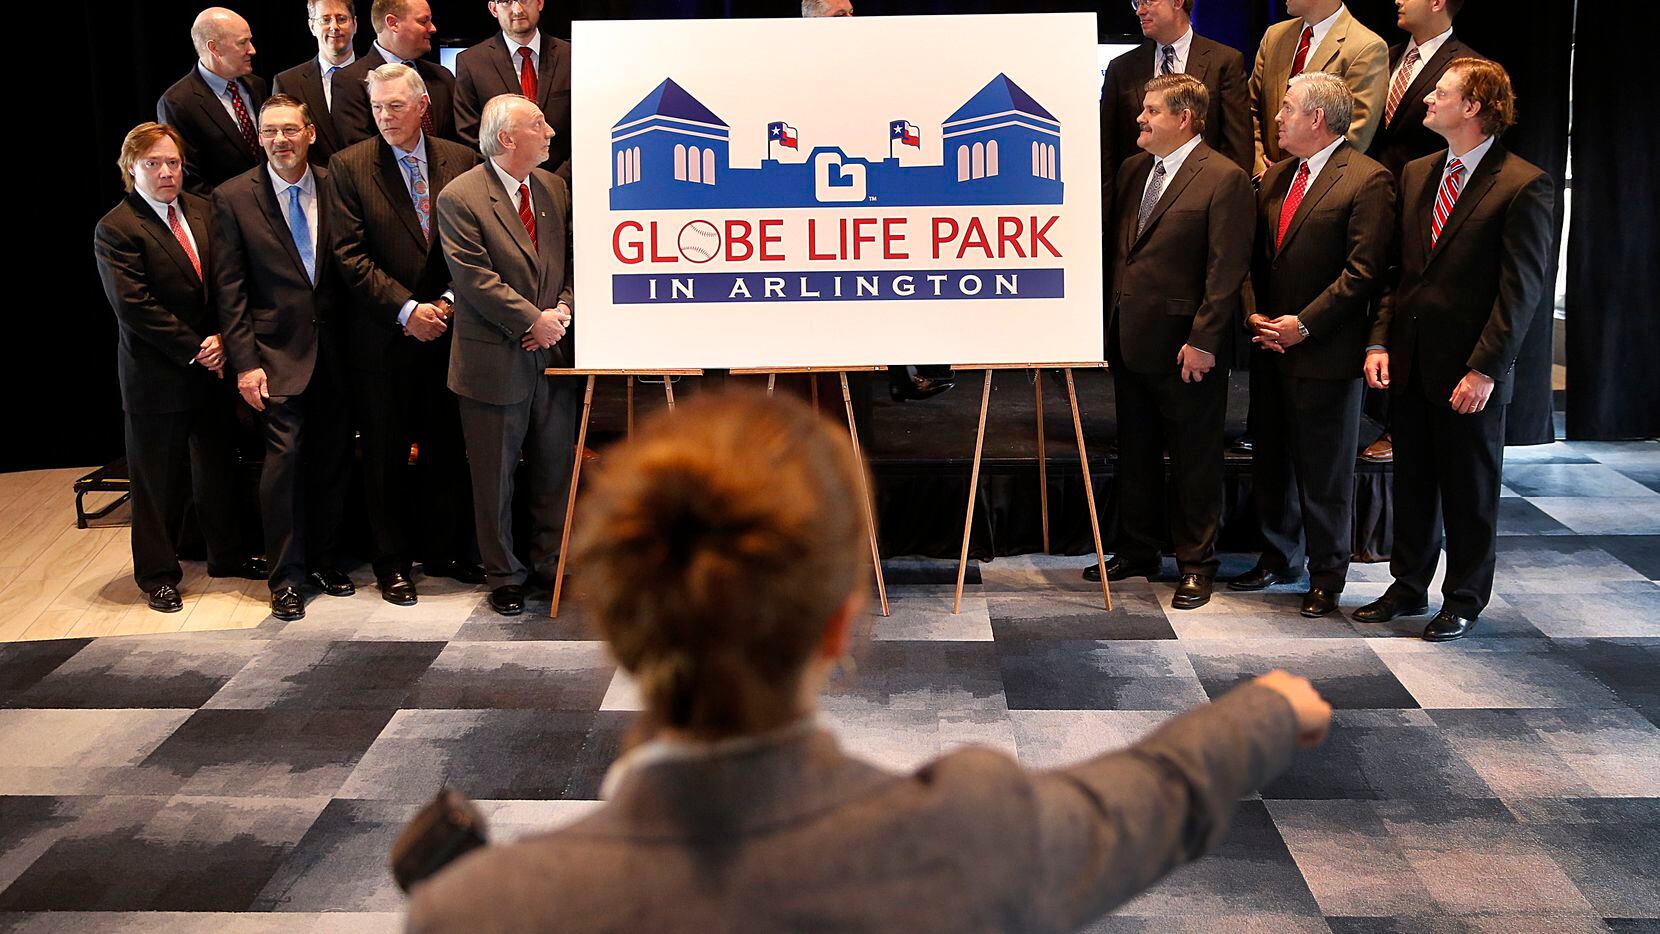 Video Texas Rangers announce Globe Life Park in Arlington